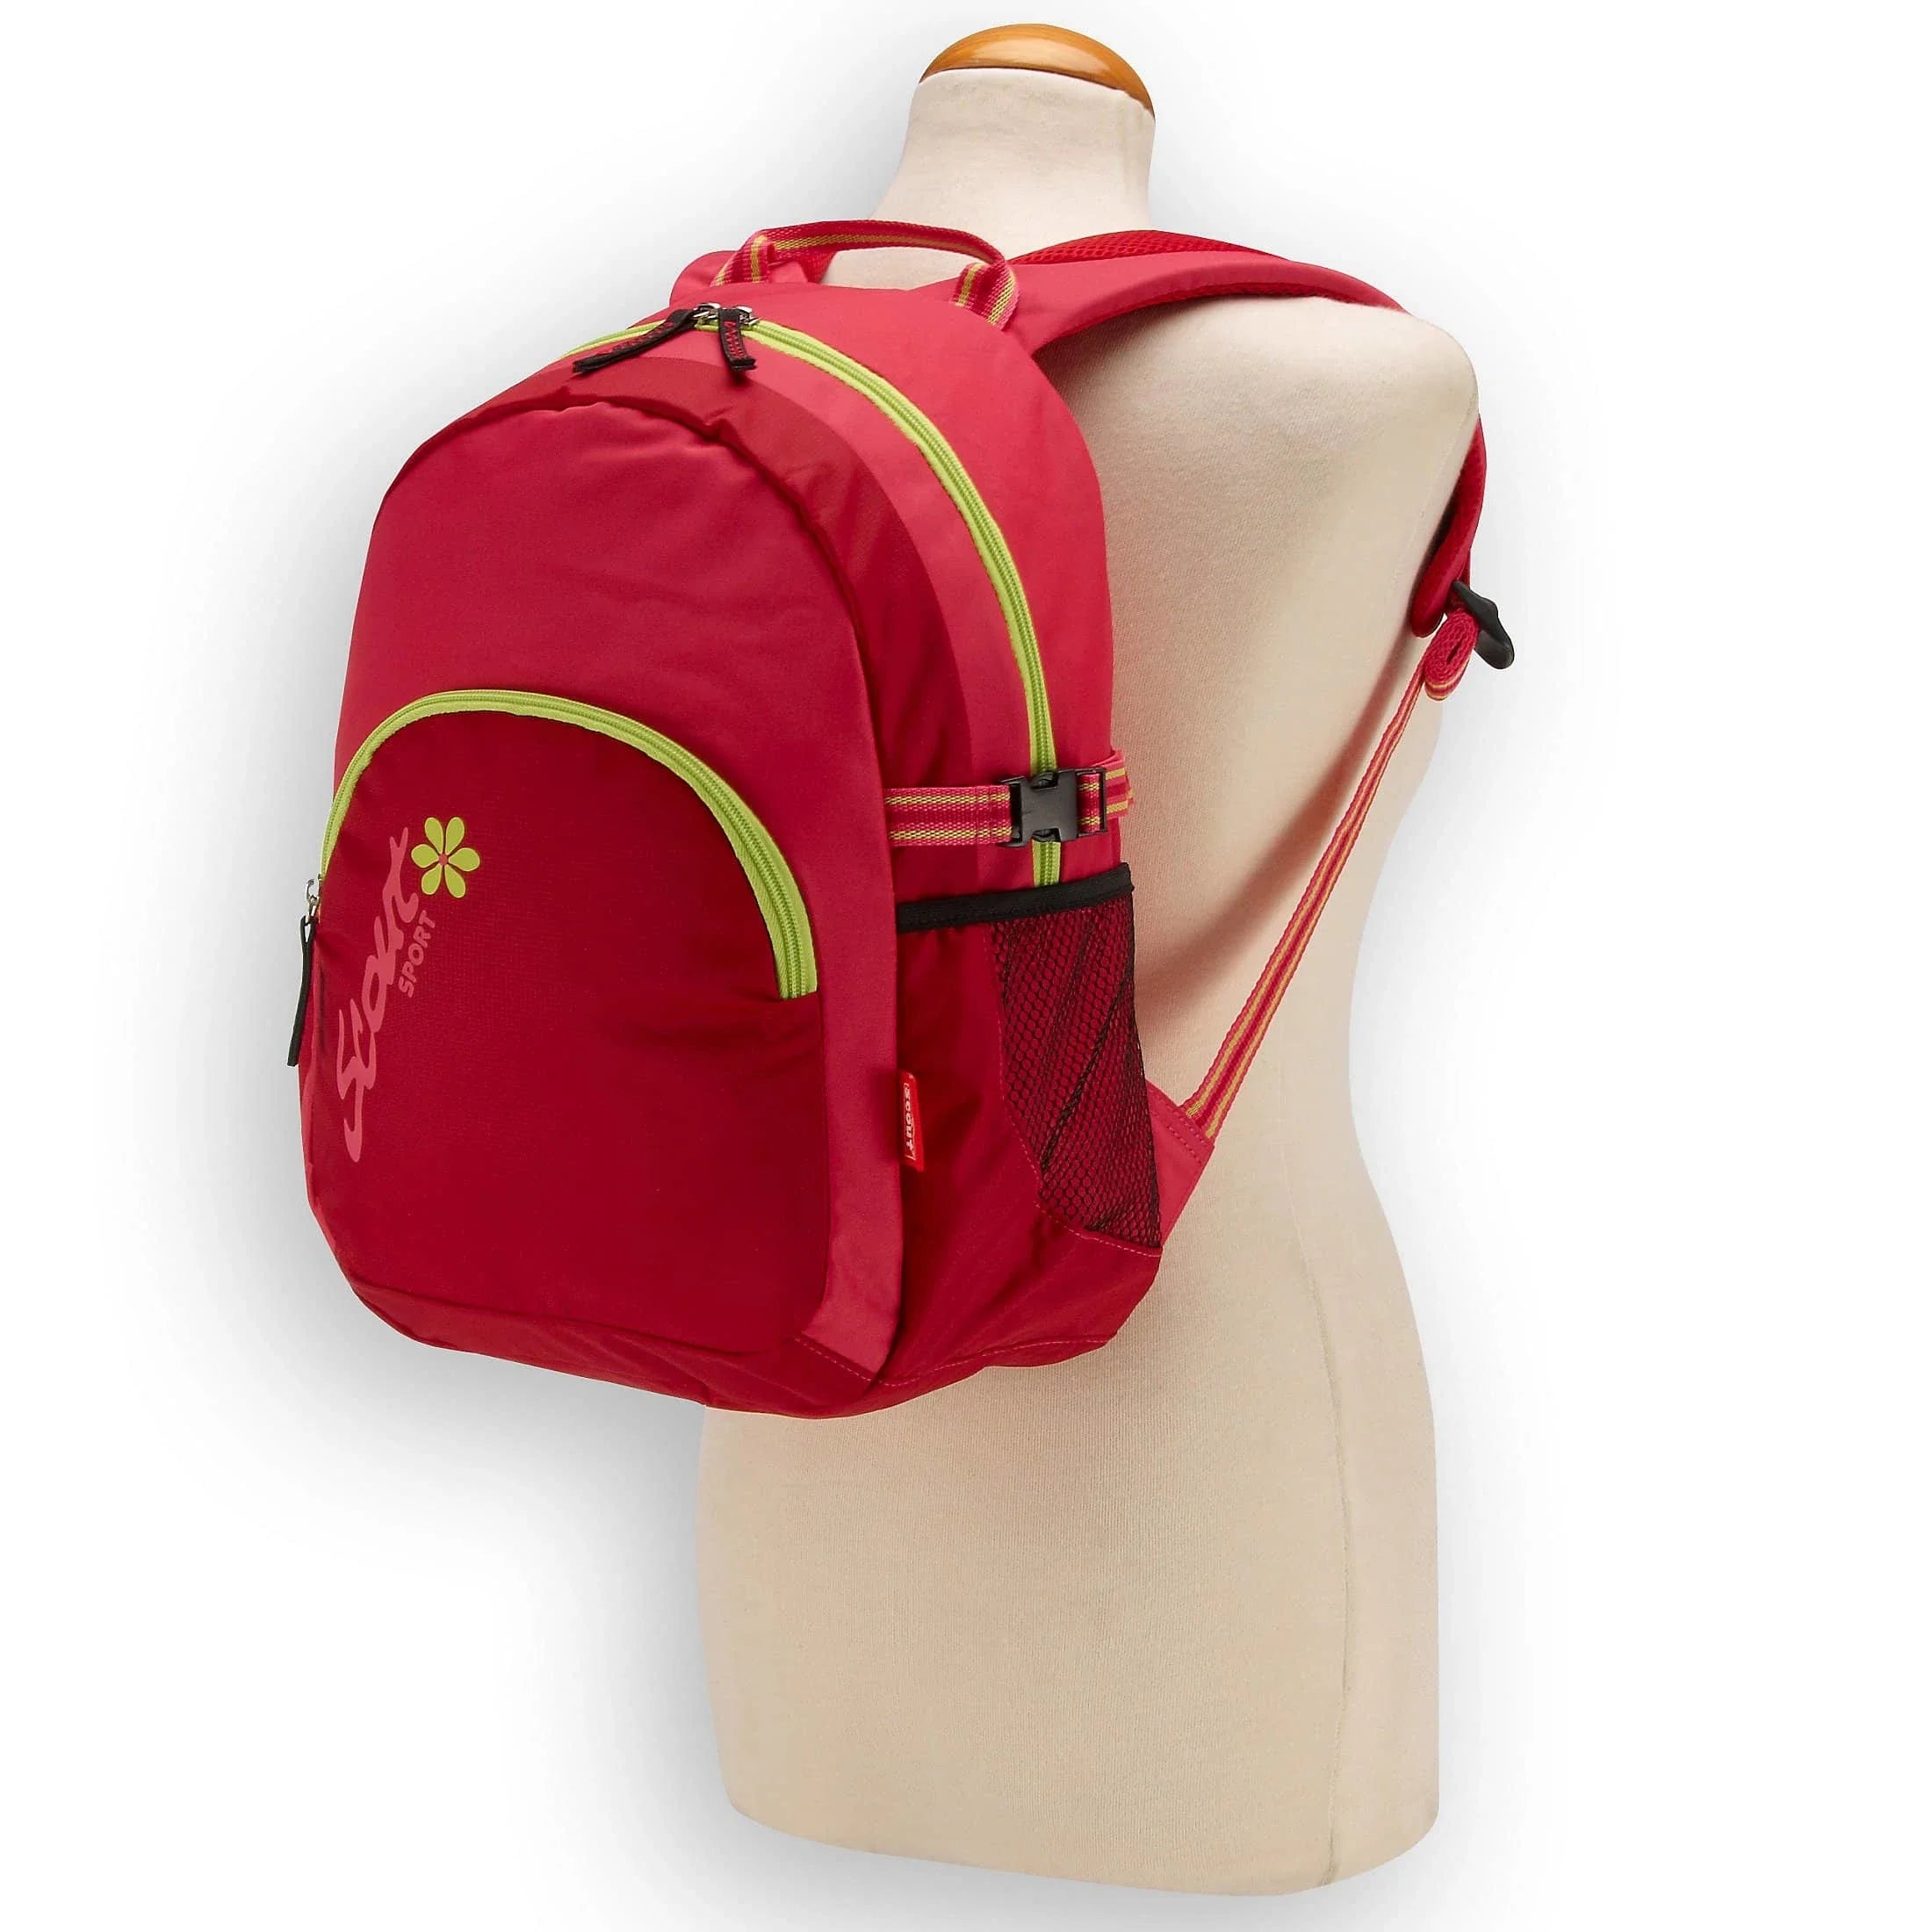 Scout Sport Kollektion Backpack Allround Rucksack 40 cm - nightblue/stone